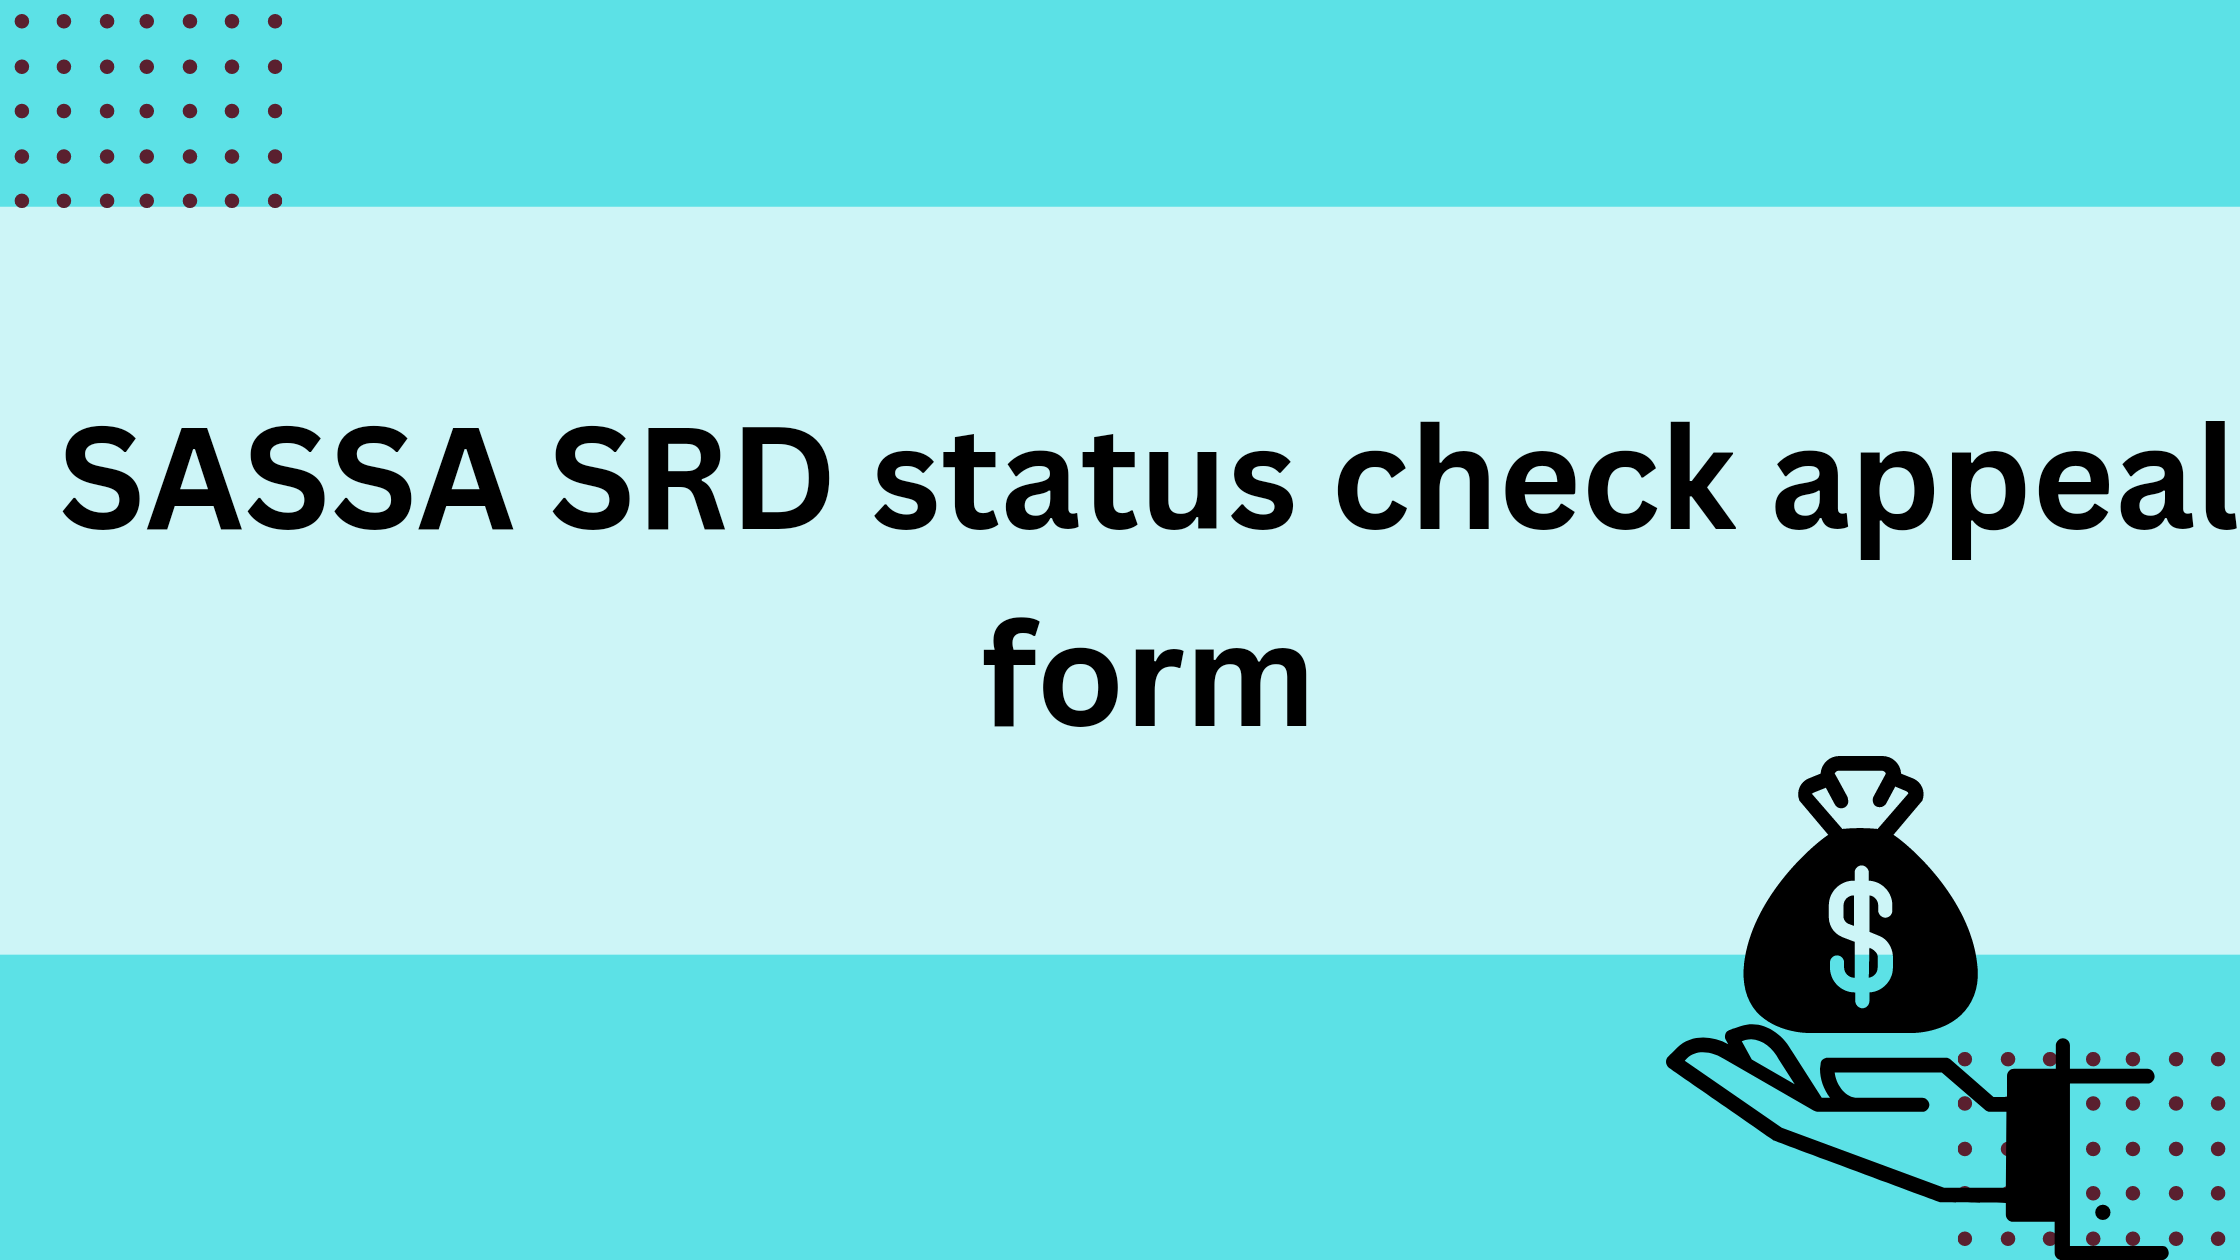 SASSA SRD status check appeal form